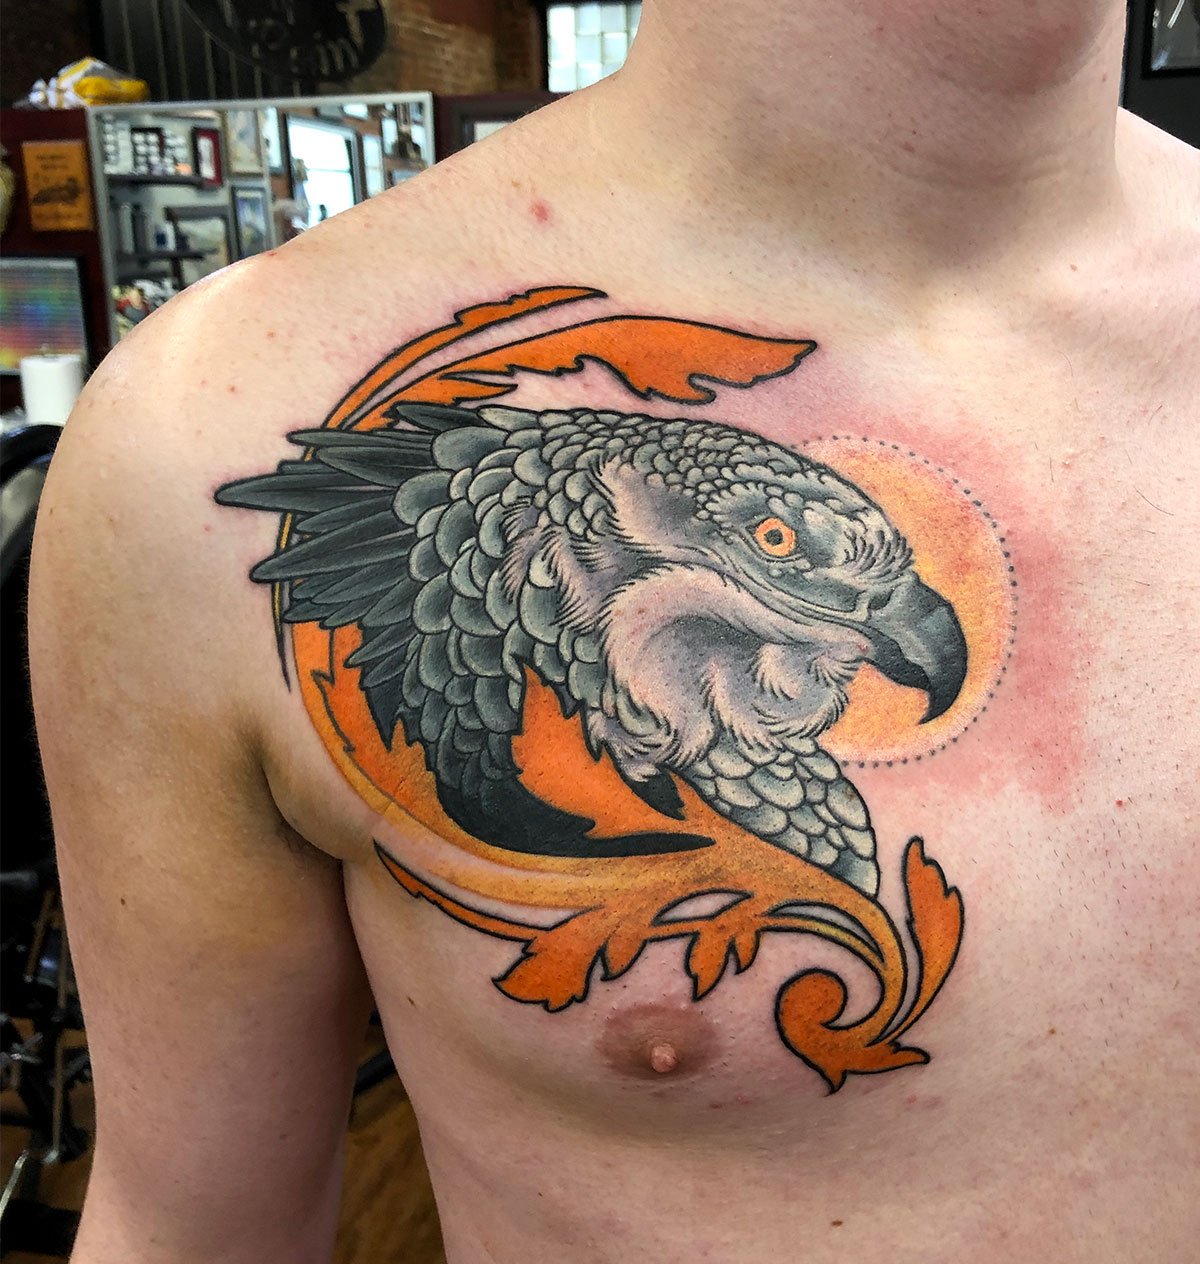 The Silver Key on X: Rad Harpy Eagle tattoo done by John Kautz